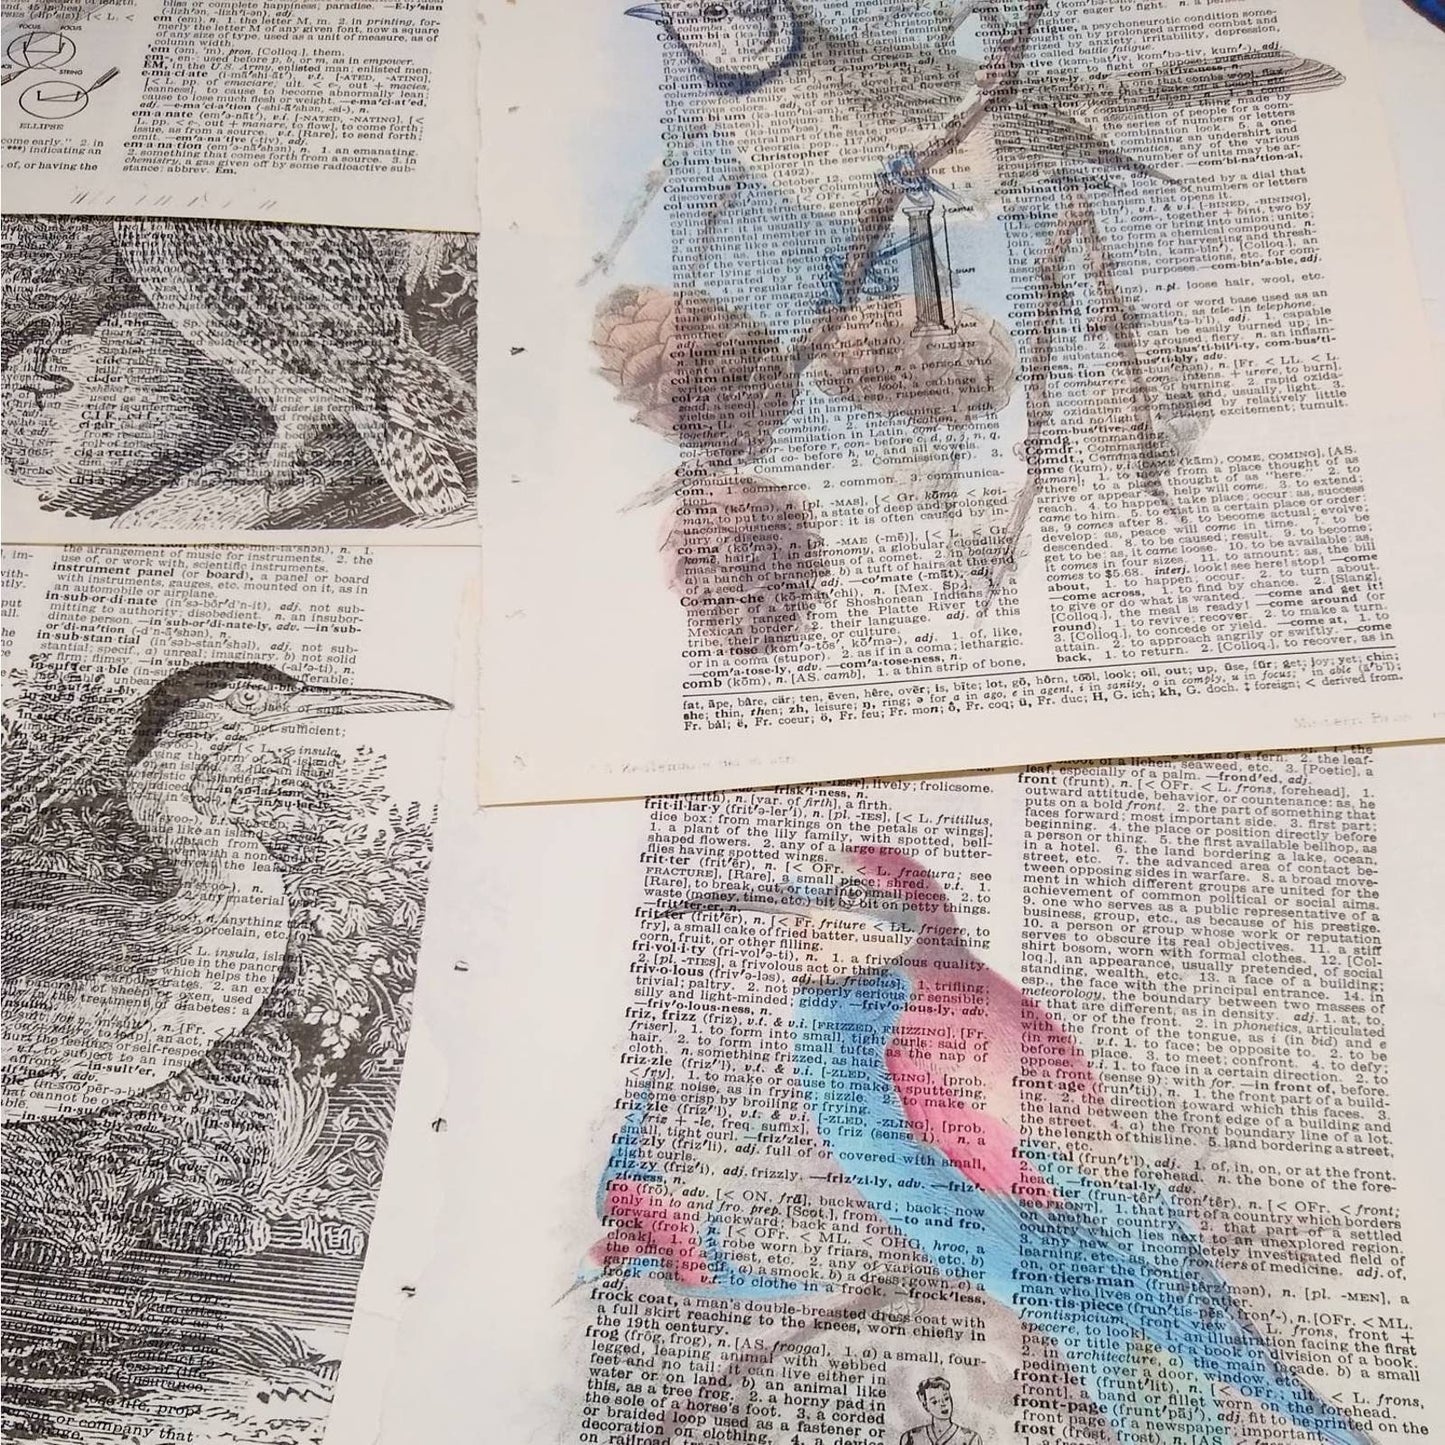 Bird Vintage Dictionary Prints, Colorful Bird Prints, Book Page Prints